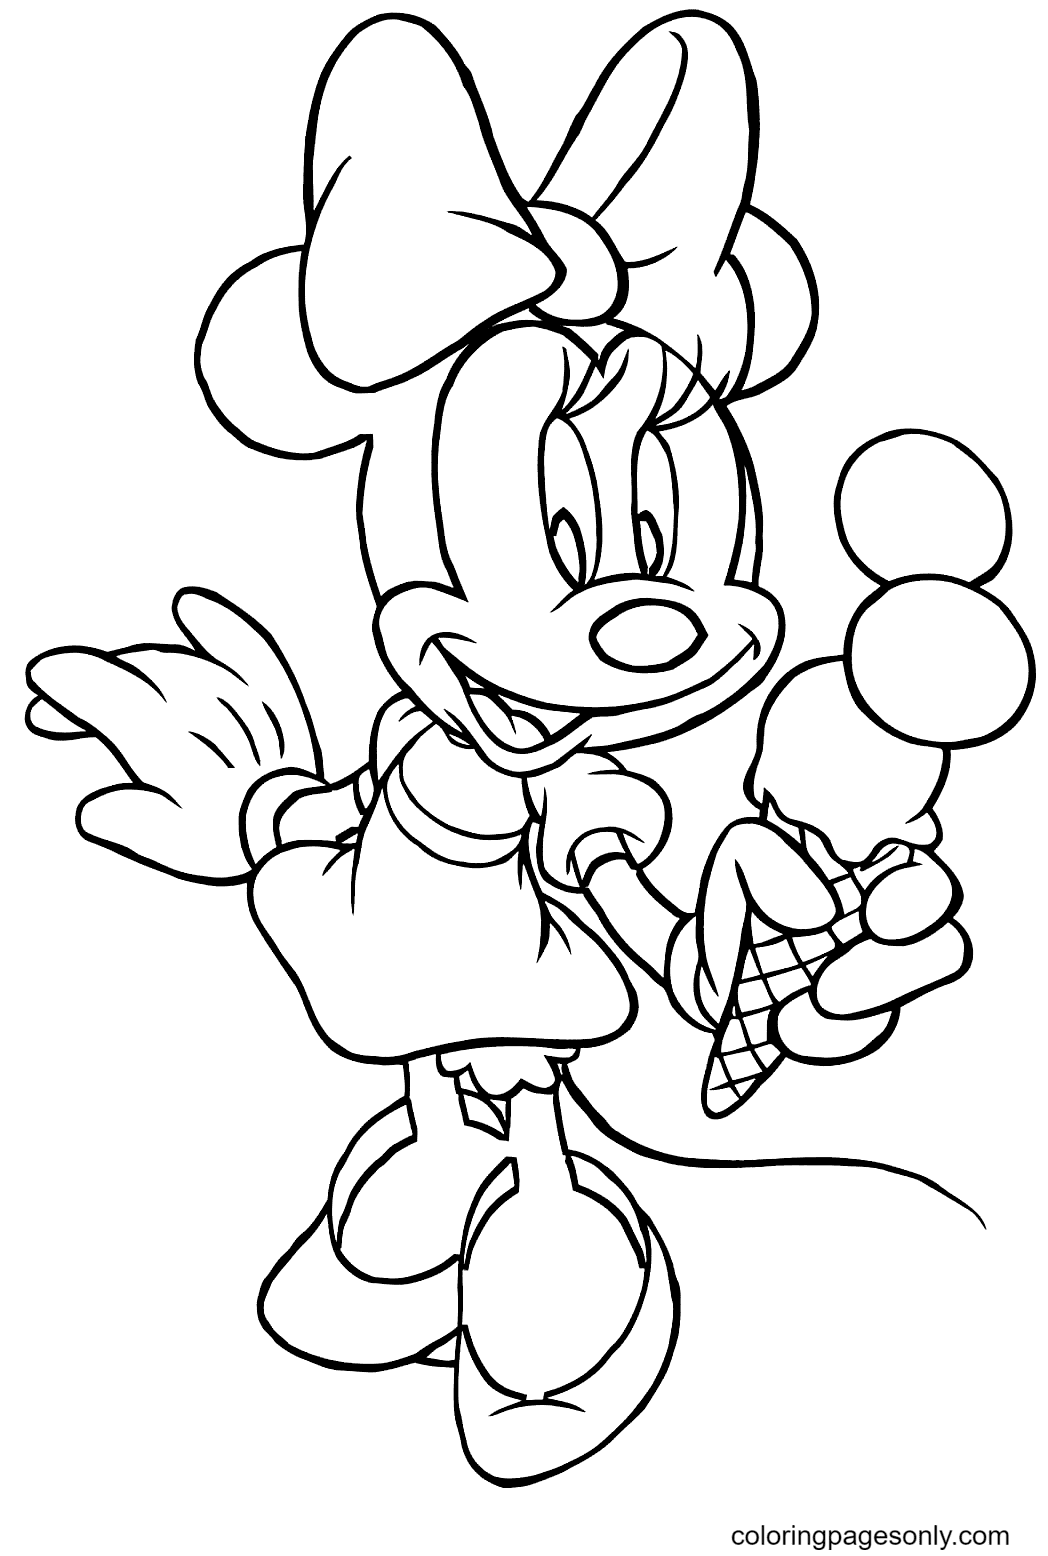 Kleurplaat Minnie Mouse met ijsje